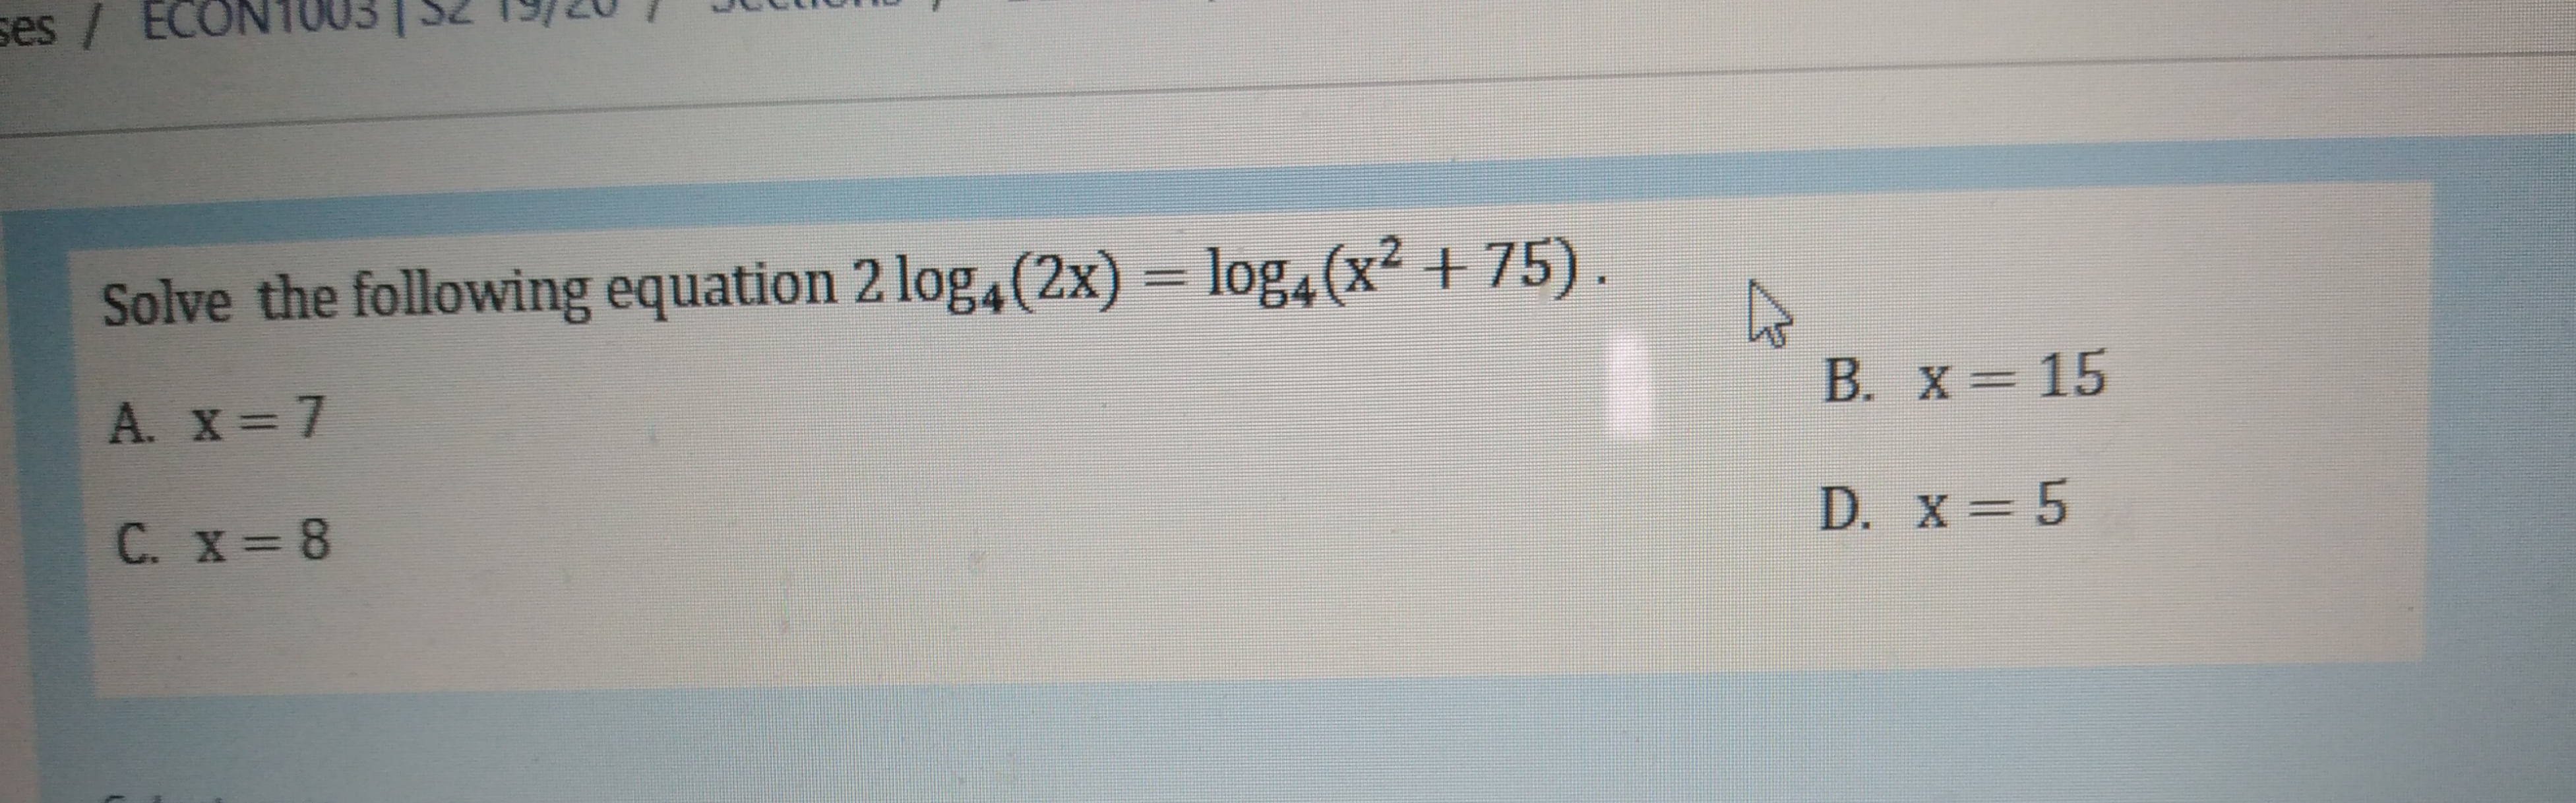 ses / ECONT003 | SZ 19/2
Solve the following equation 2 log,(2x):
= log4(x² + 75).
A. x = 7
B. x=15
C. x = 8
D. x = 5
